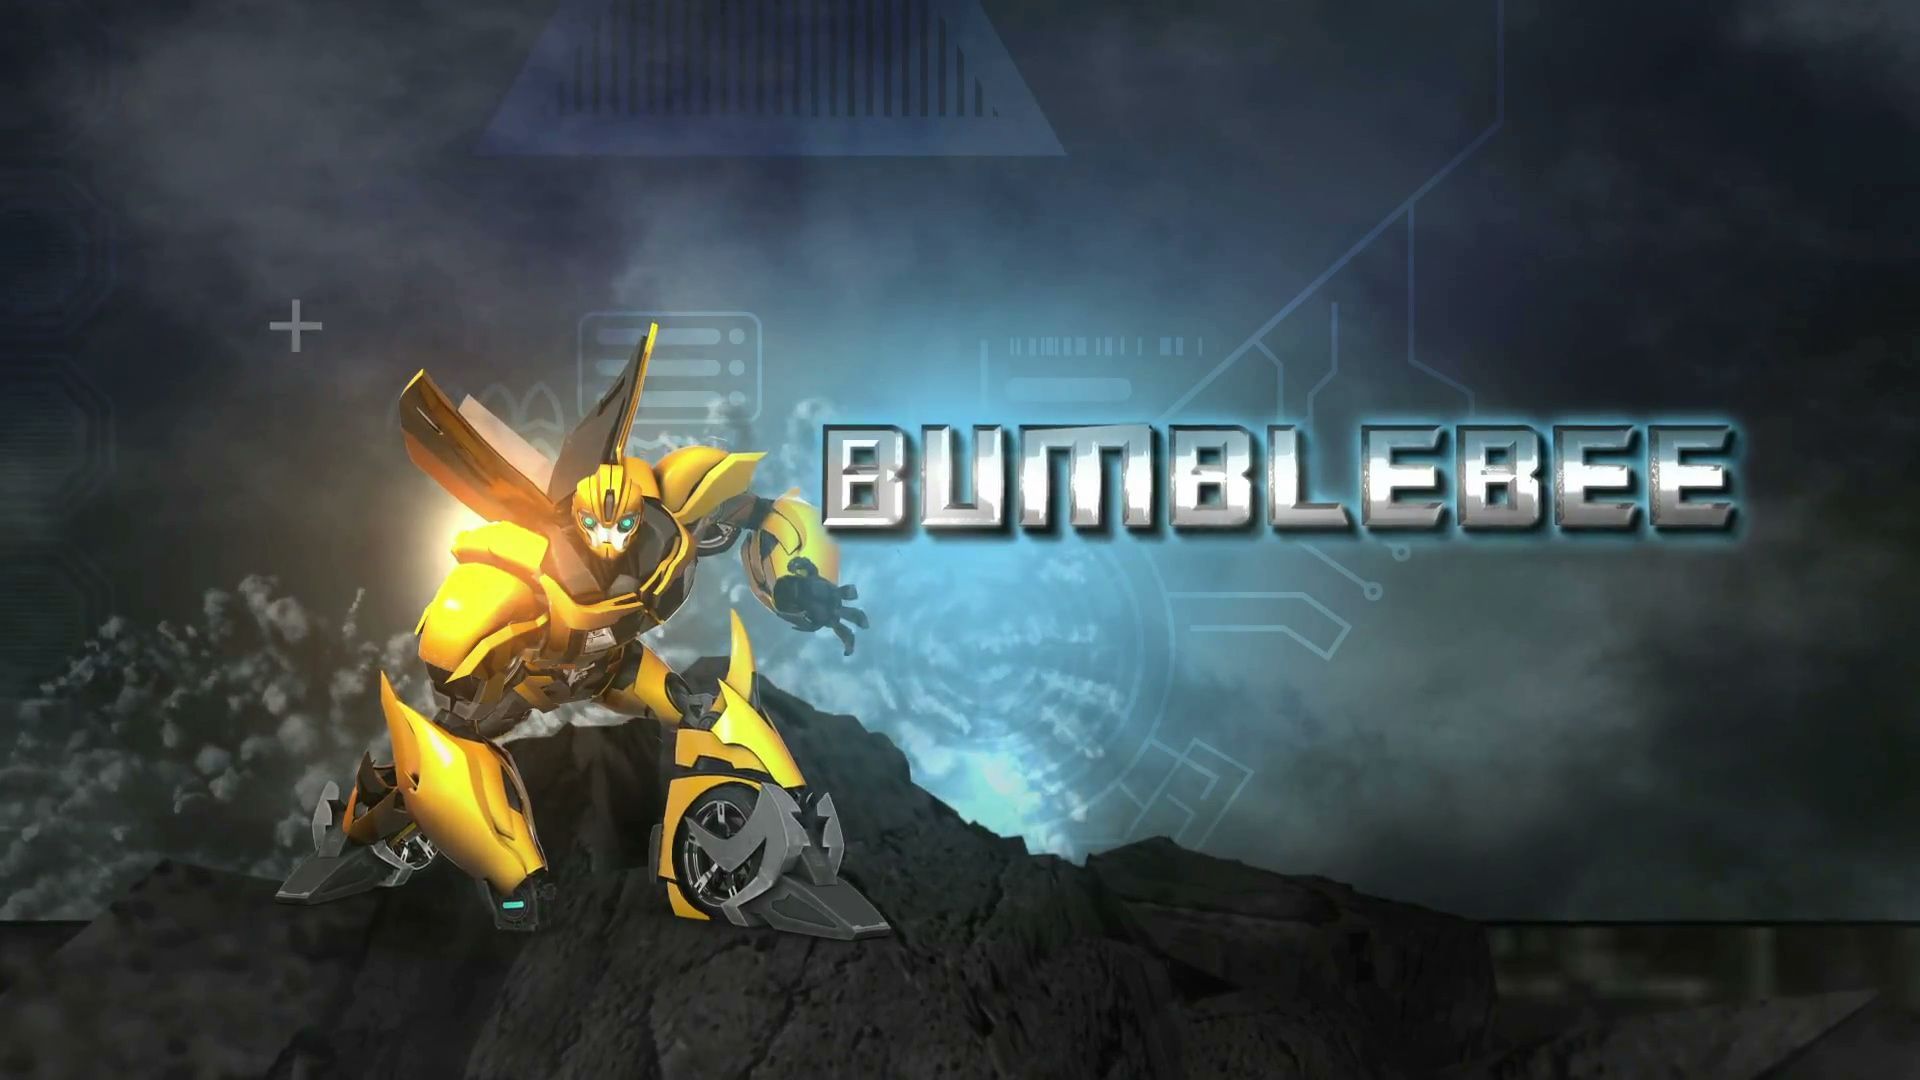 Bumblebee - The Transformers Wallpaper (36948147) - Fanpop